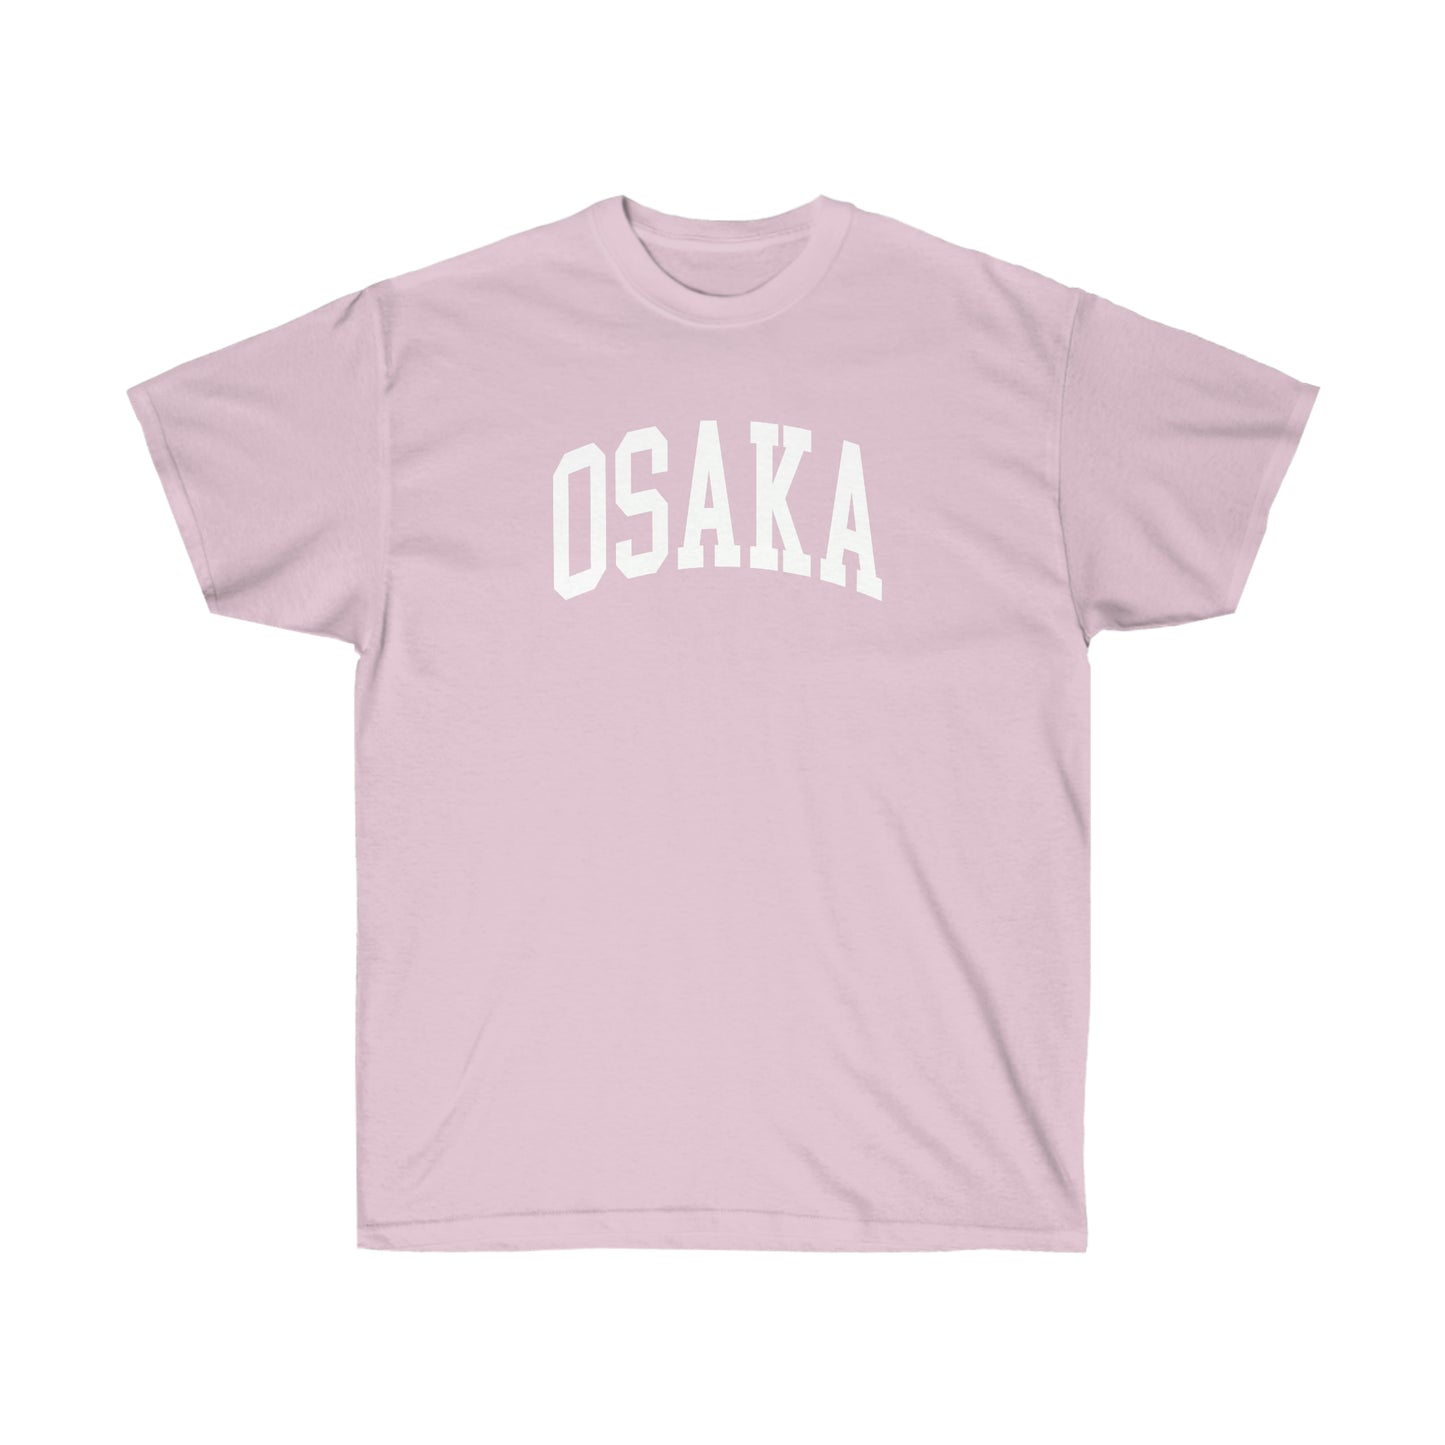 Osaka shirt Osaka Japan t-shirt College Style Pullover Vintage Inspired tee